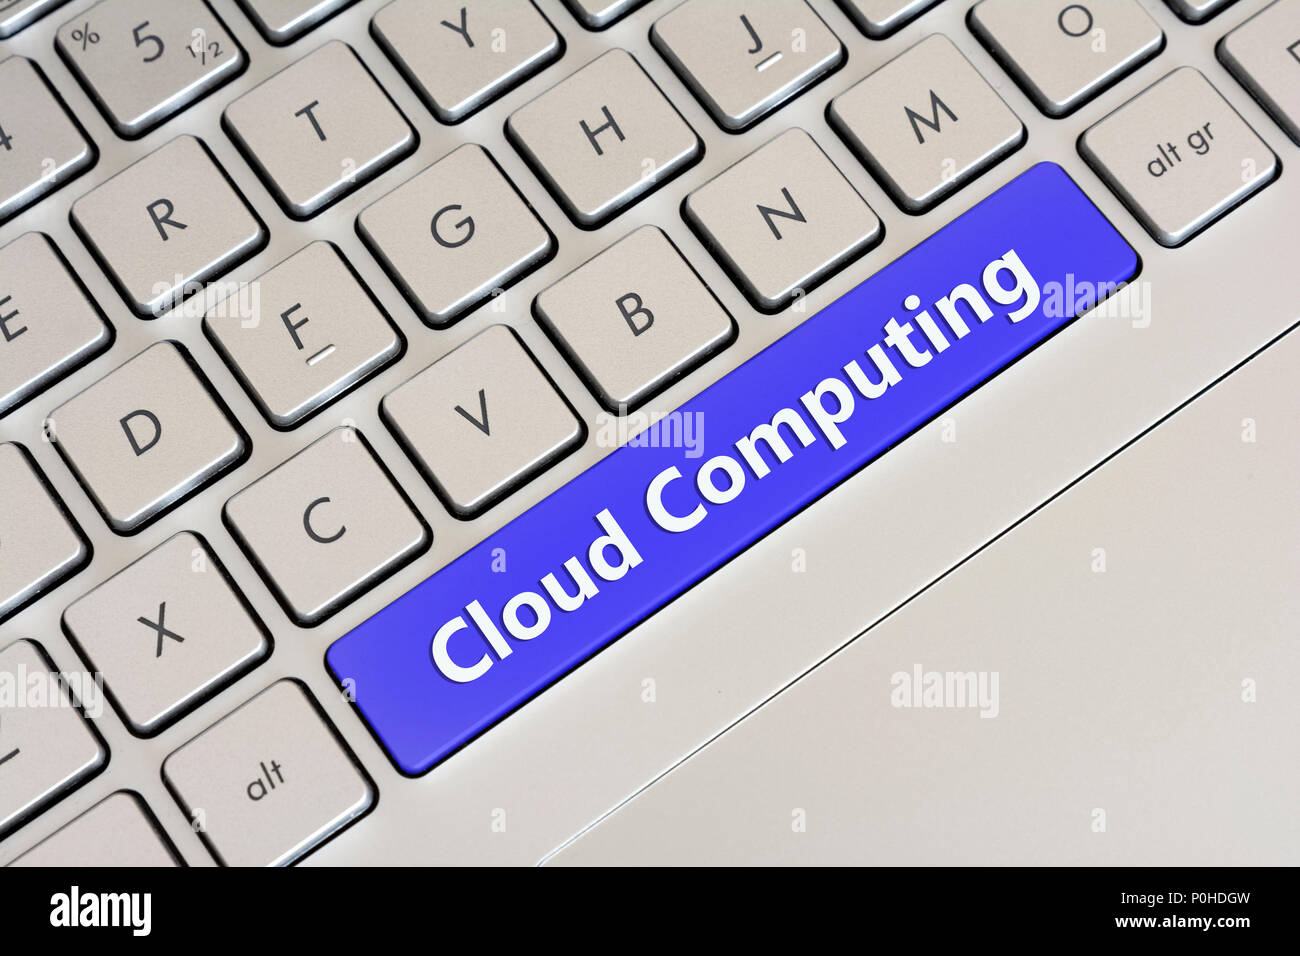 Cloud Computing Writing On Computer Keyboard Stock Photo